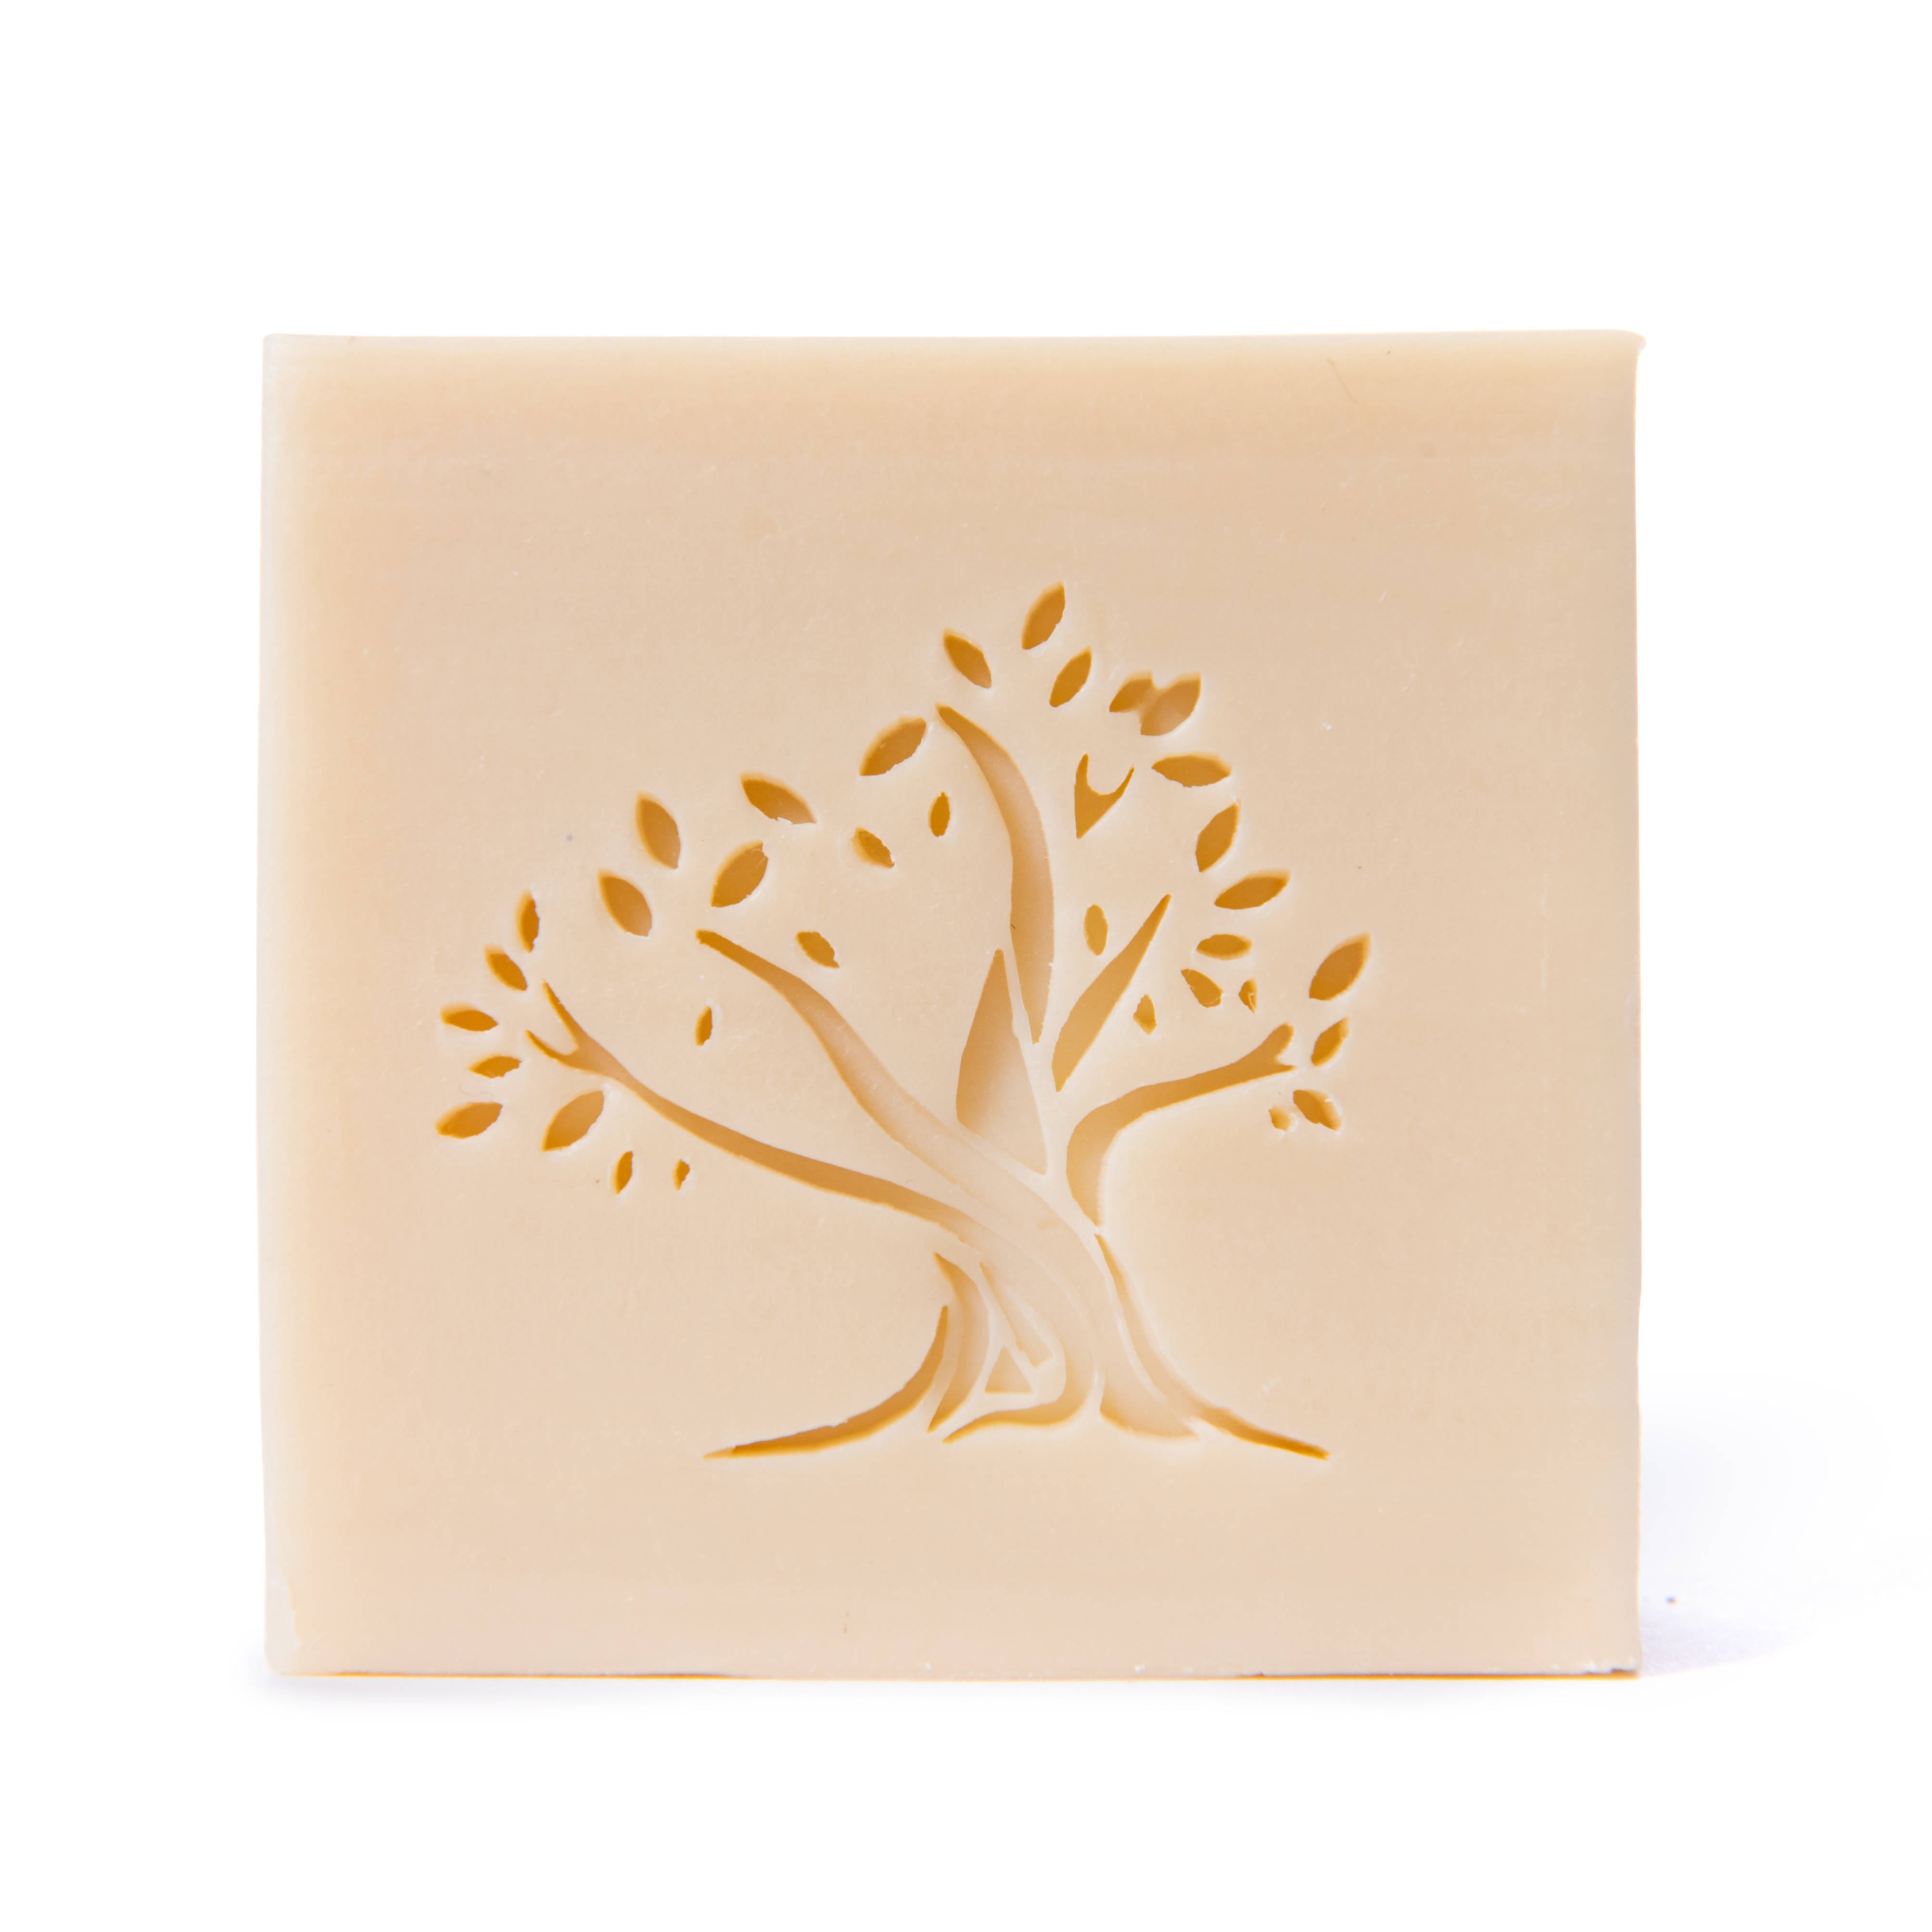 Le Joyau d'Olive Luxury Ancestral Soap, Handcrafted Artisanal Virgin Olive & Essential Oils, Gift Pack of 3 units – For Face and Body – Lavender, Rose, Orange Blossom